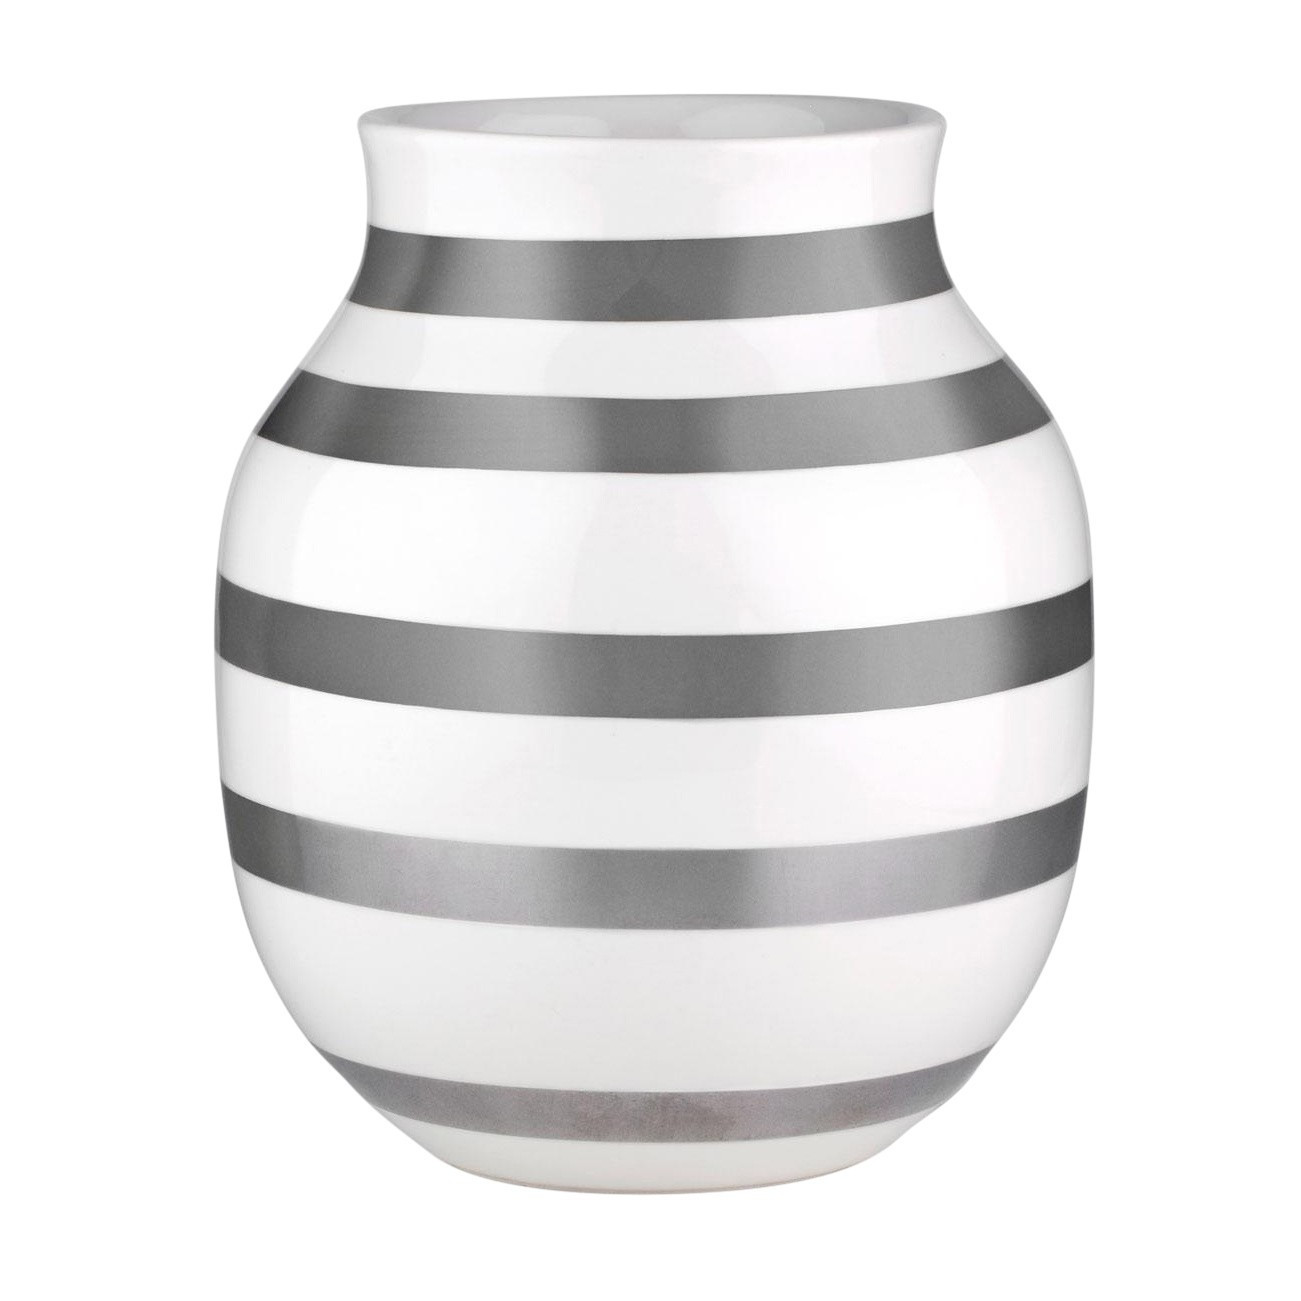 14 Fashionable Porcelain Vases for Sale 2024 free download porcelain vases for sale of kac2a4hler omaggio vase h 20cm ambientedirect for kaehler omaggio vase h 20cm 1301x1301 id1921287 a5a6443d0dabe71acedaf537e483024e